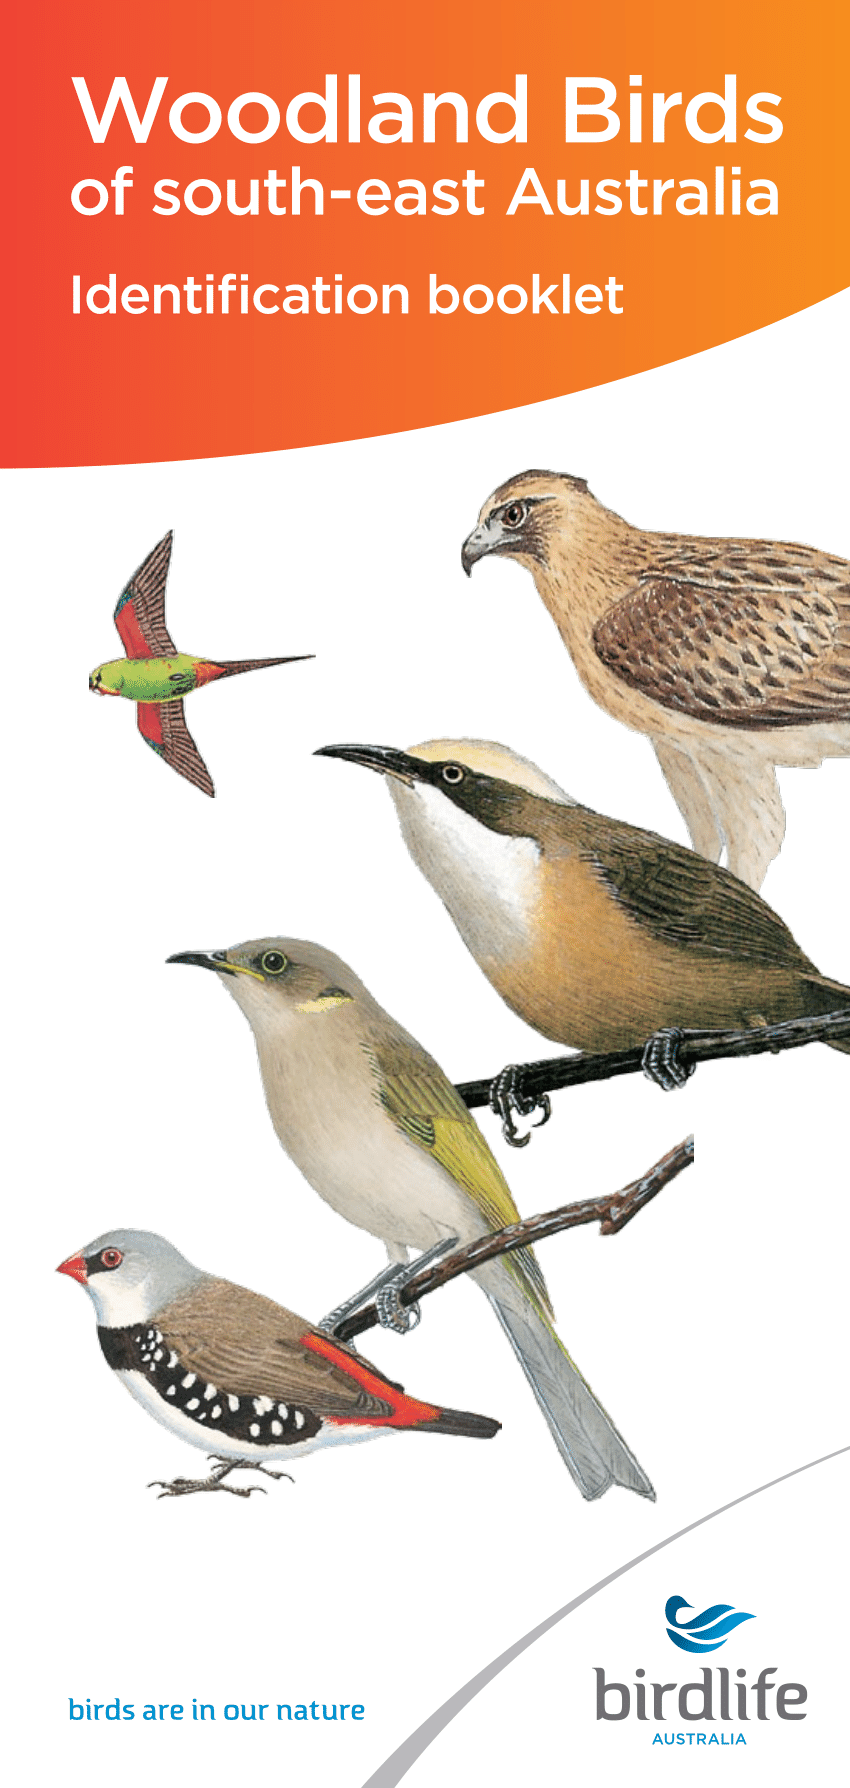 pdf-woodland-birds-of-south-east-australia-identification-booklet